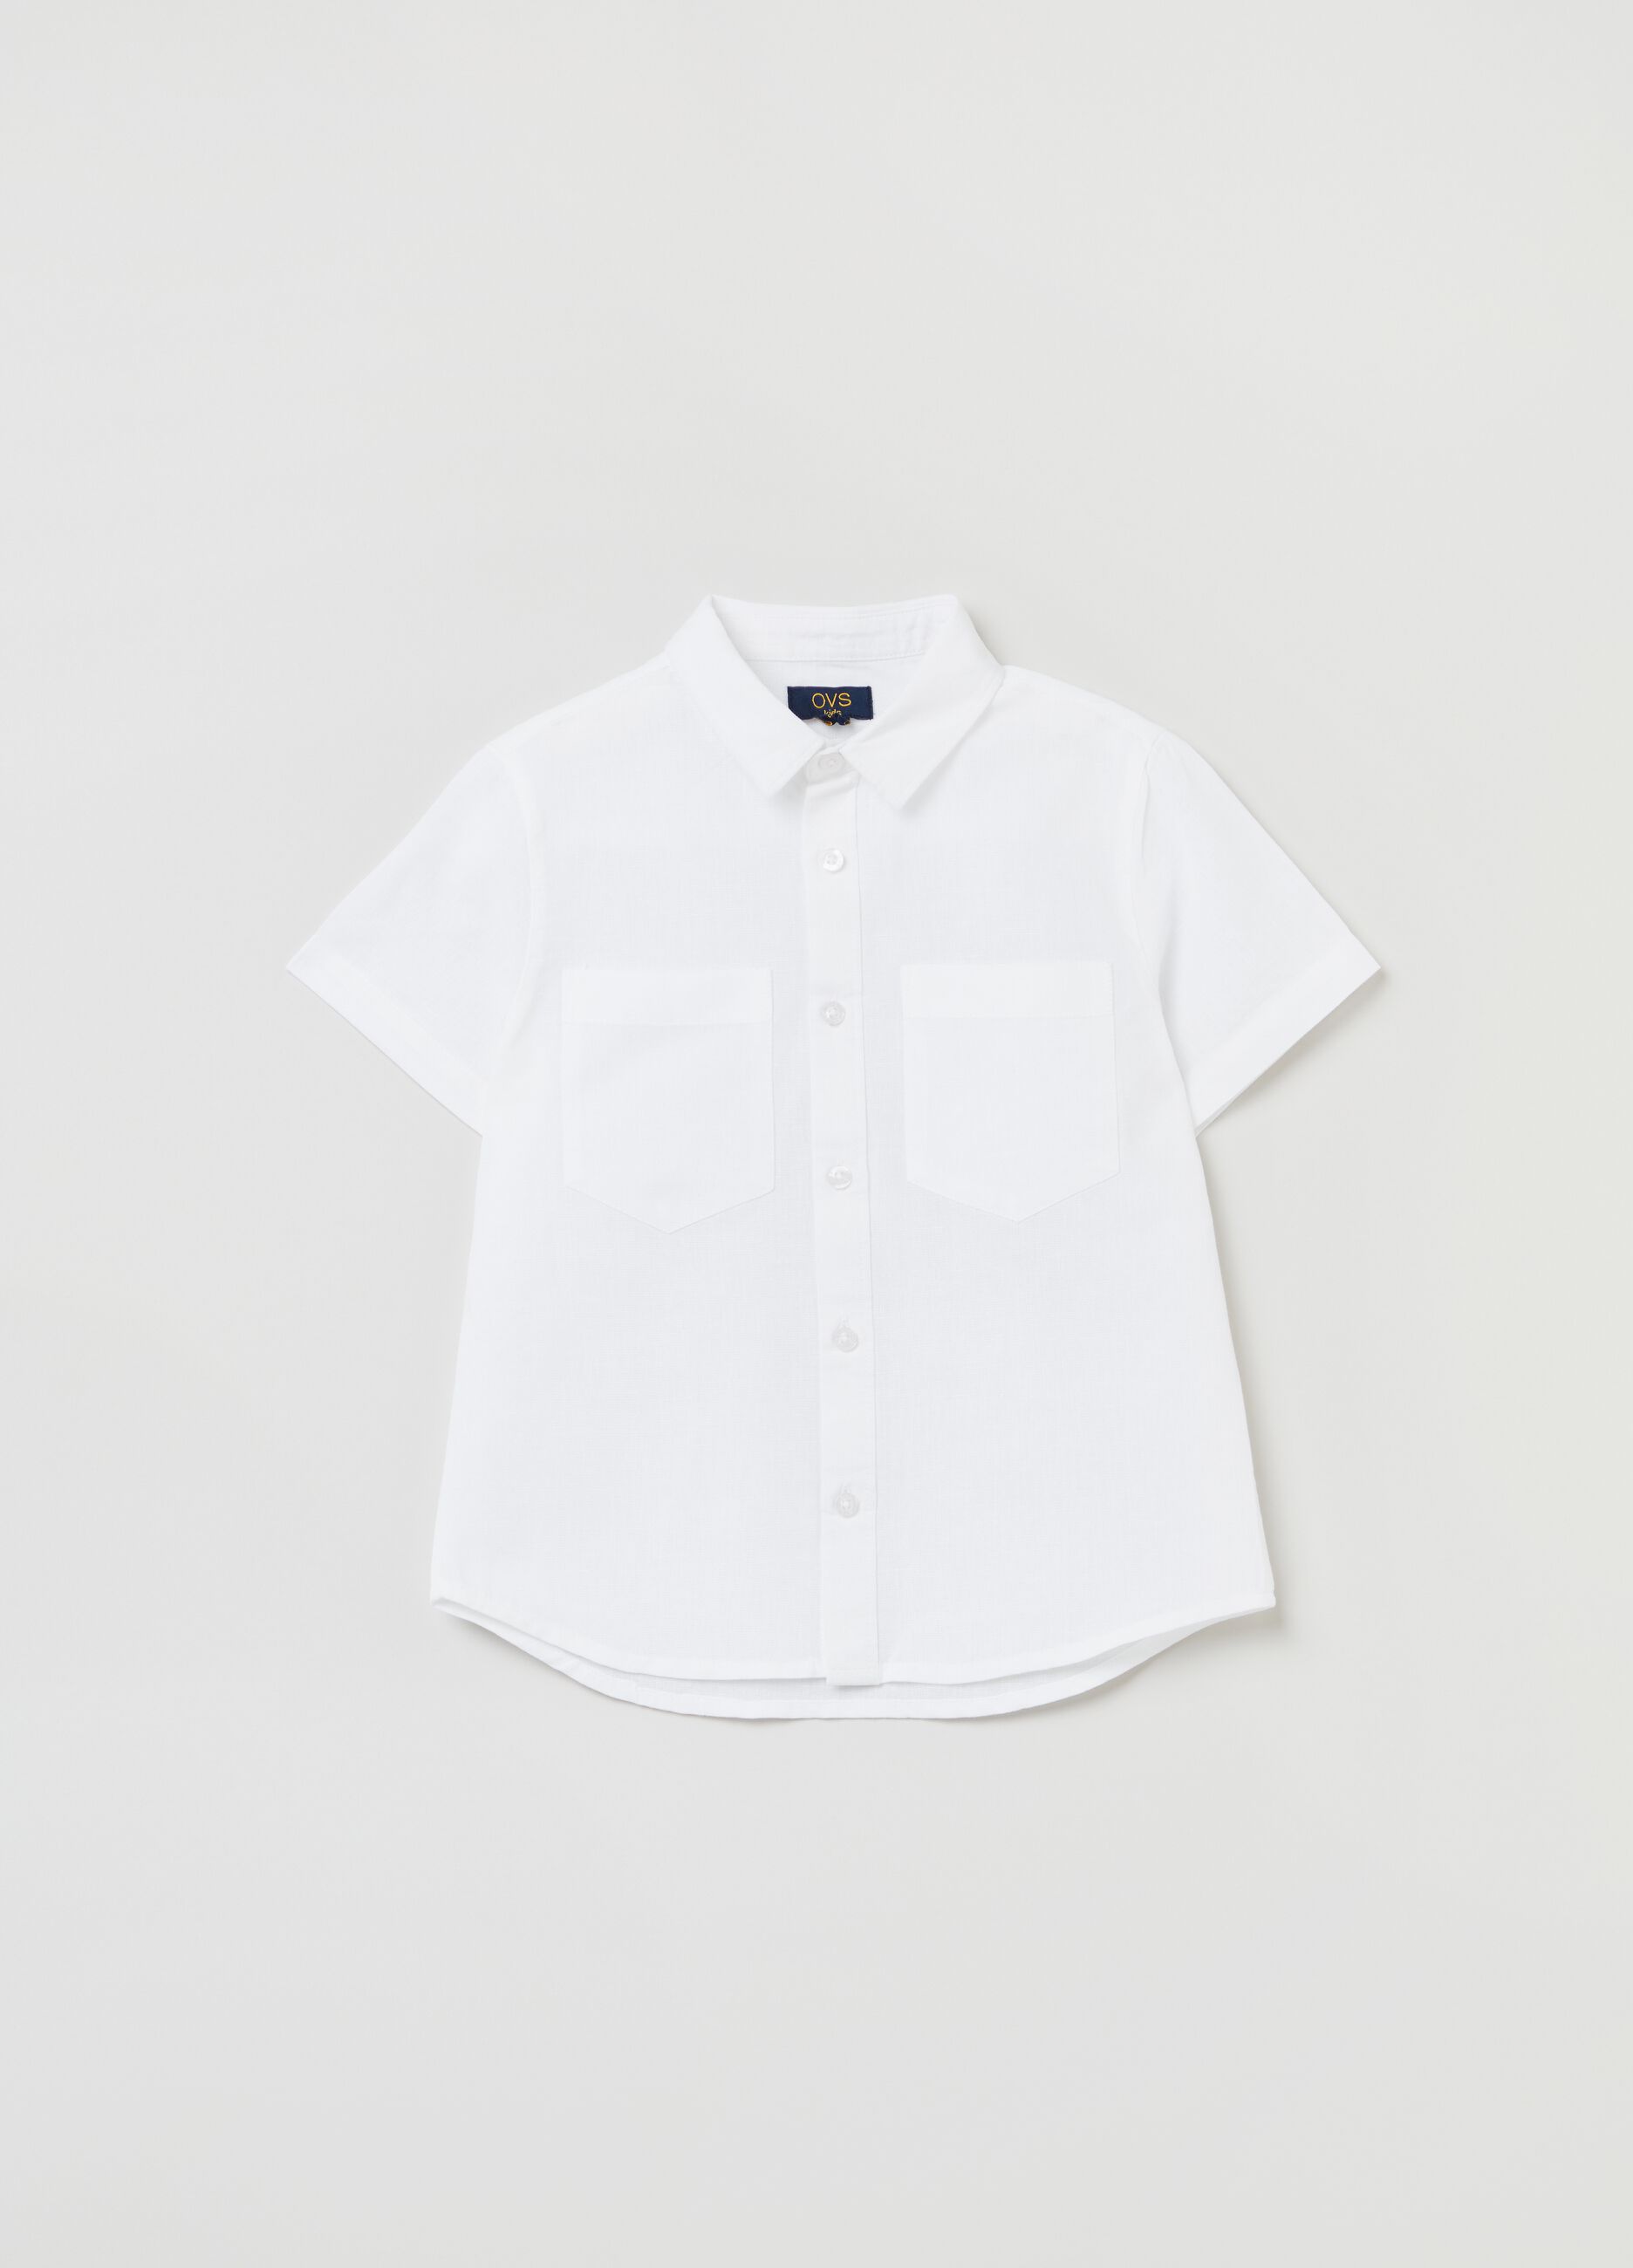 Linen and cotton short-sleeved shirt.